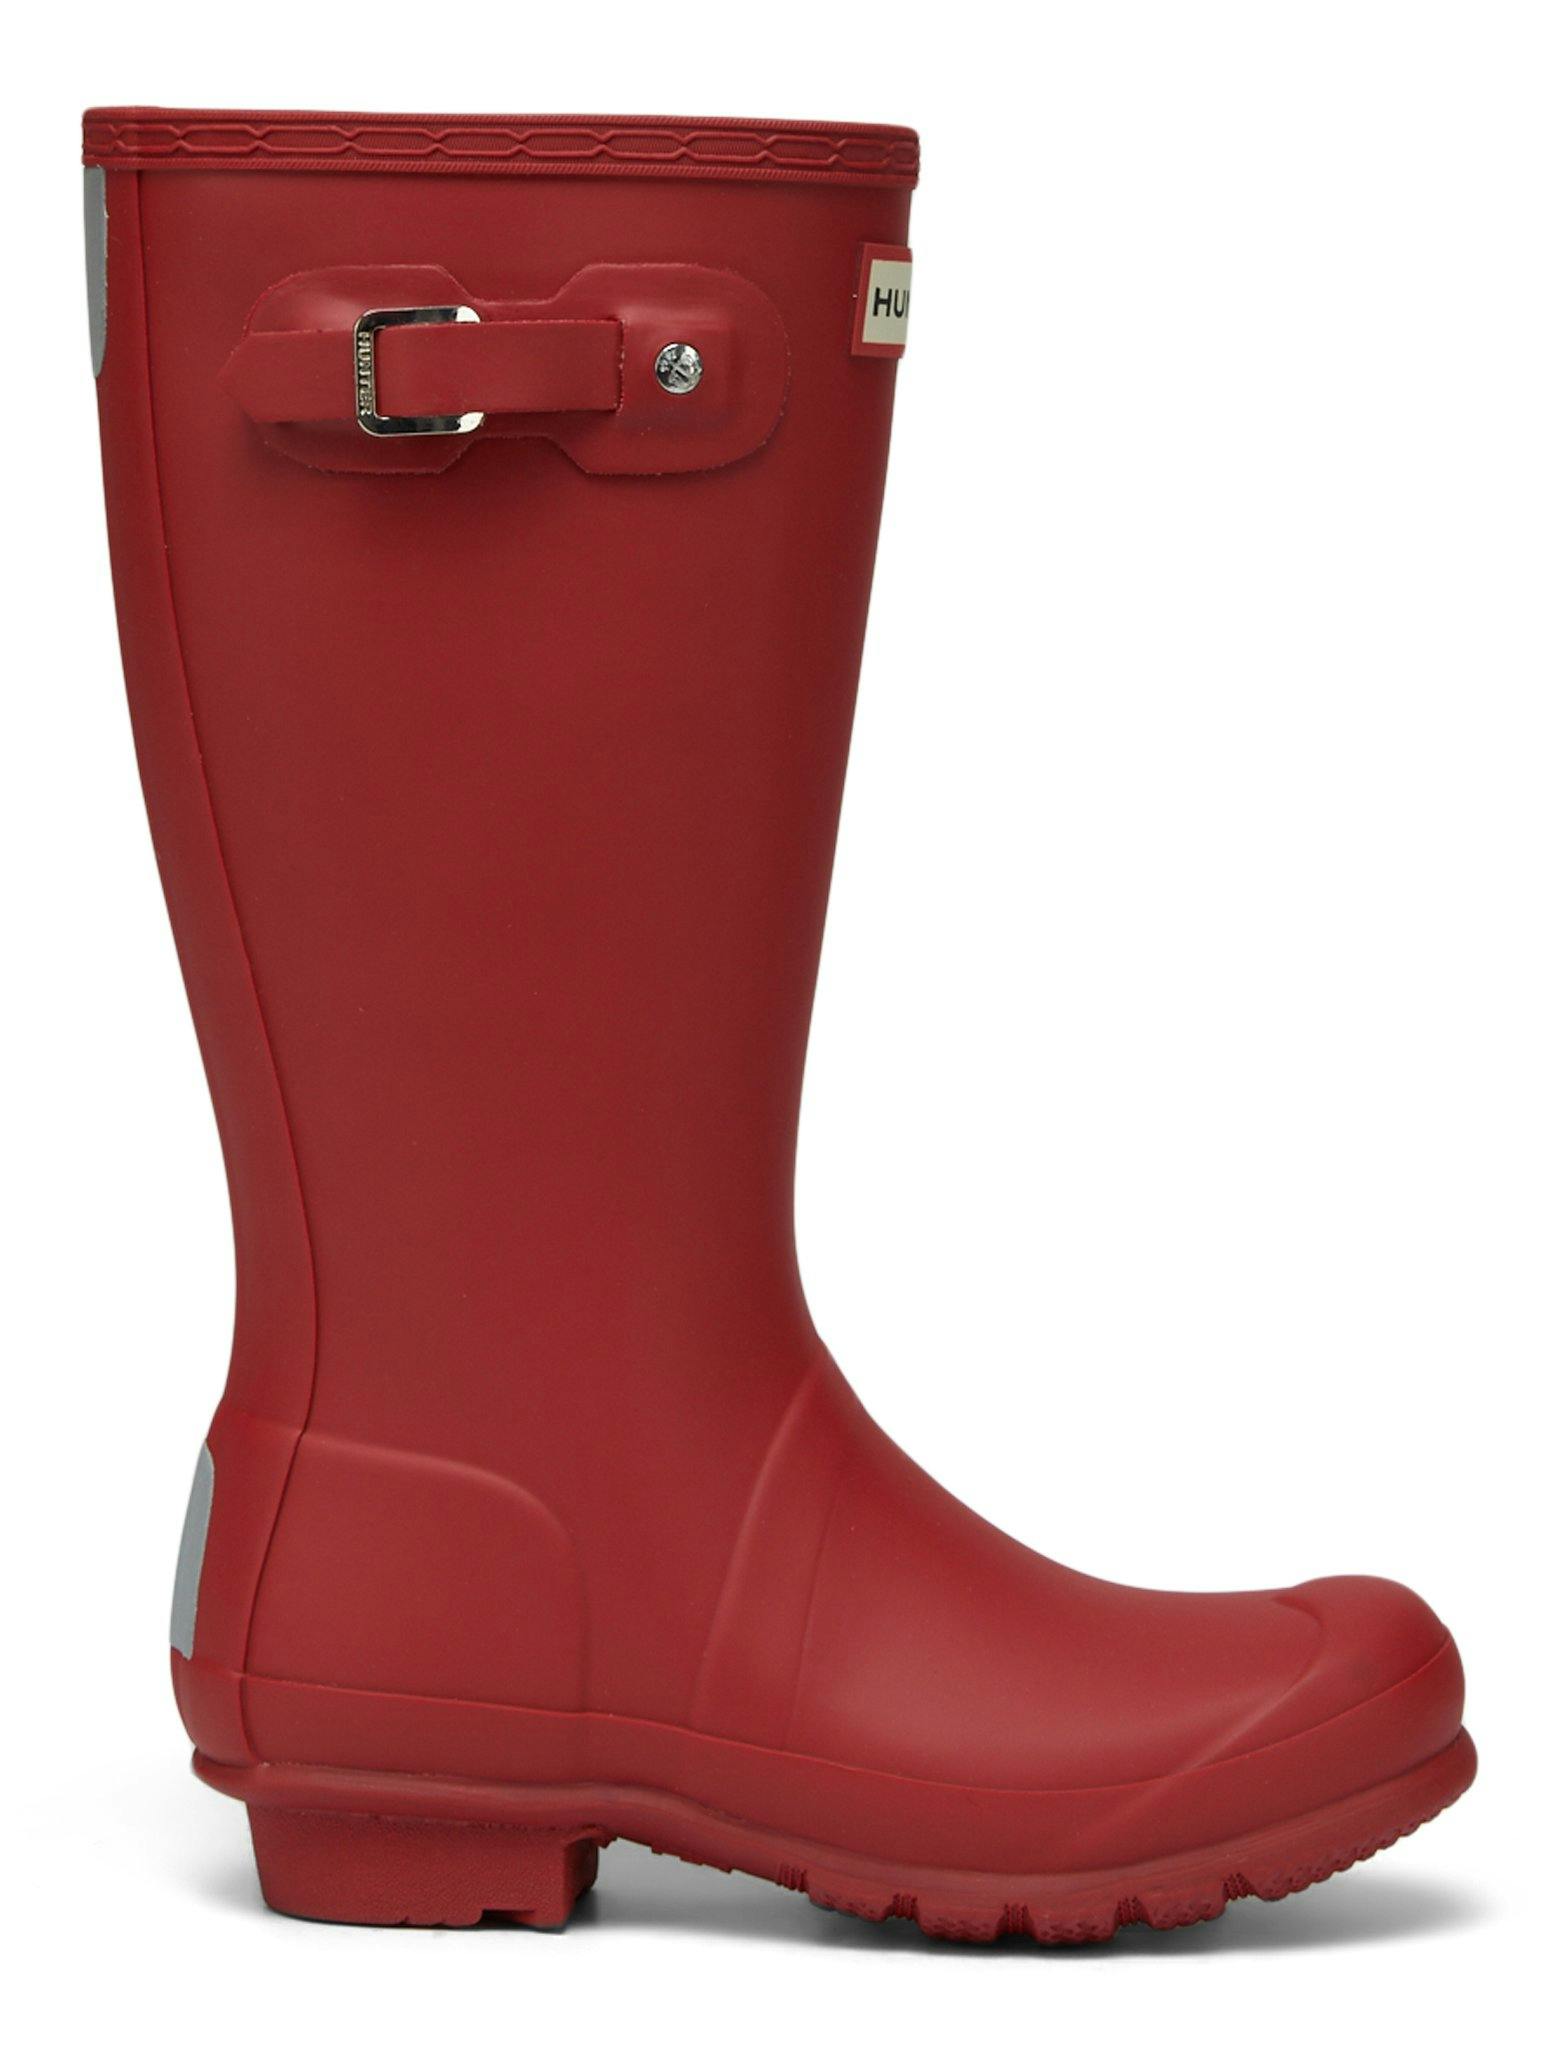 Product image for Original Rain Boots - Big Kids